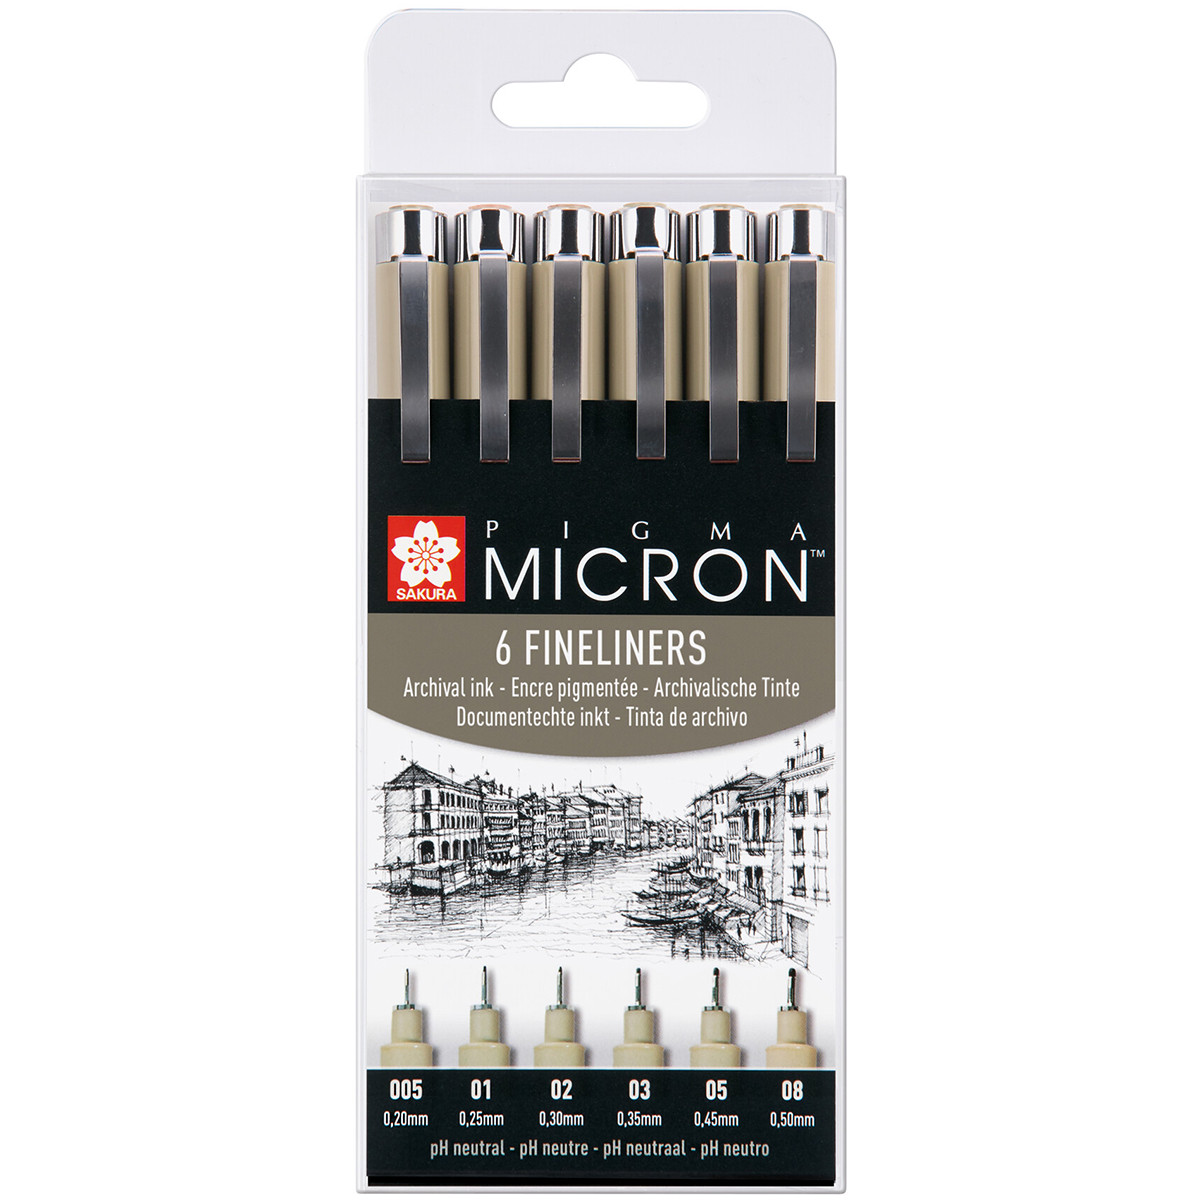 Sakura Pigma Micron Pen Set - Black - Assorted Tip Sizes (Pack of 6)